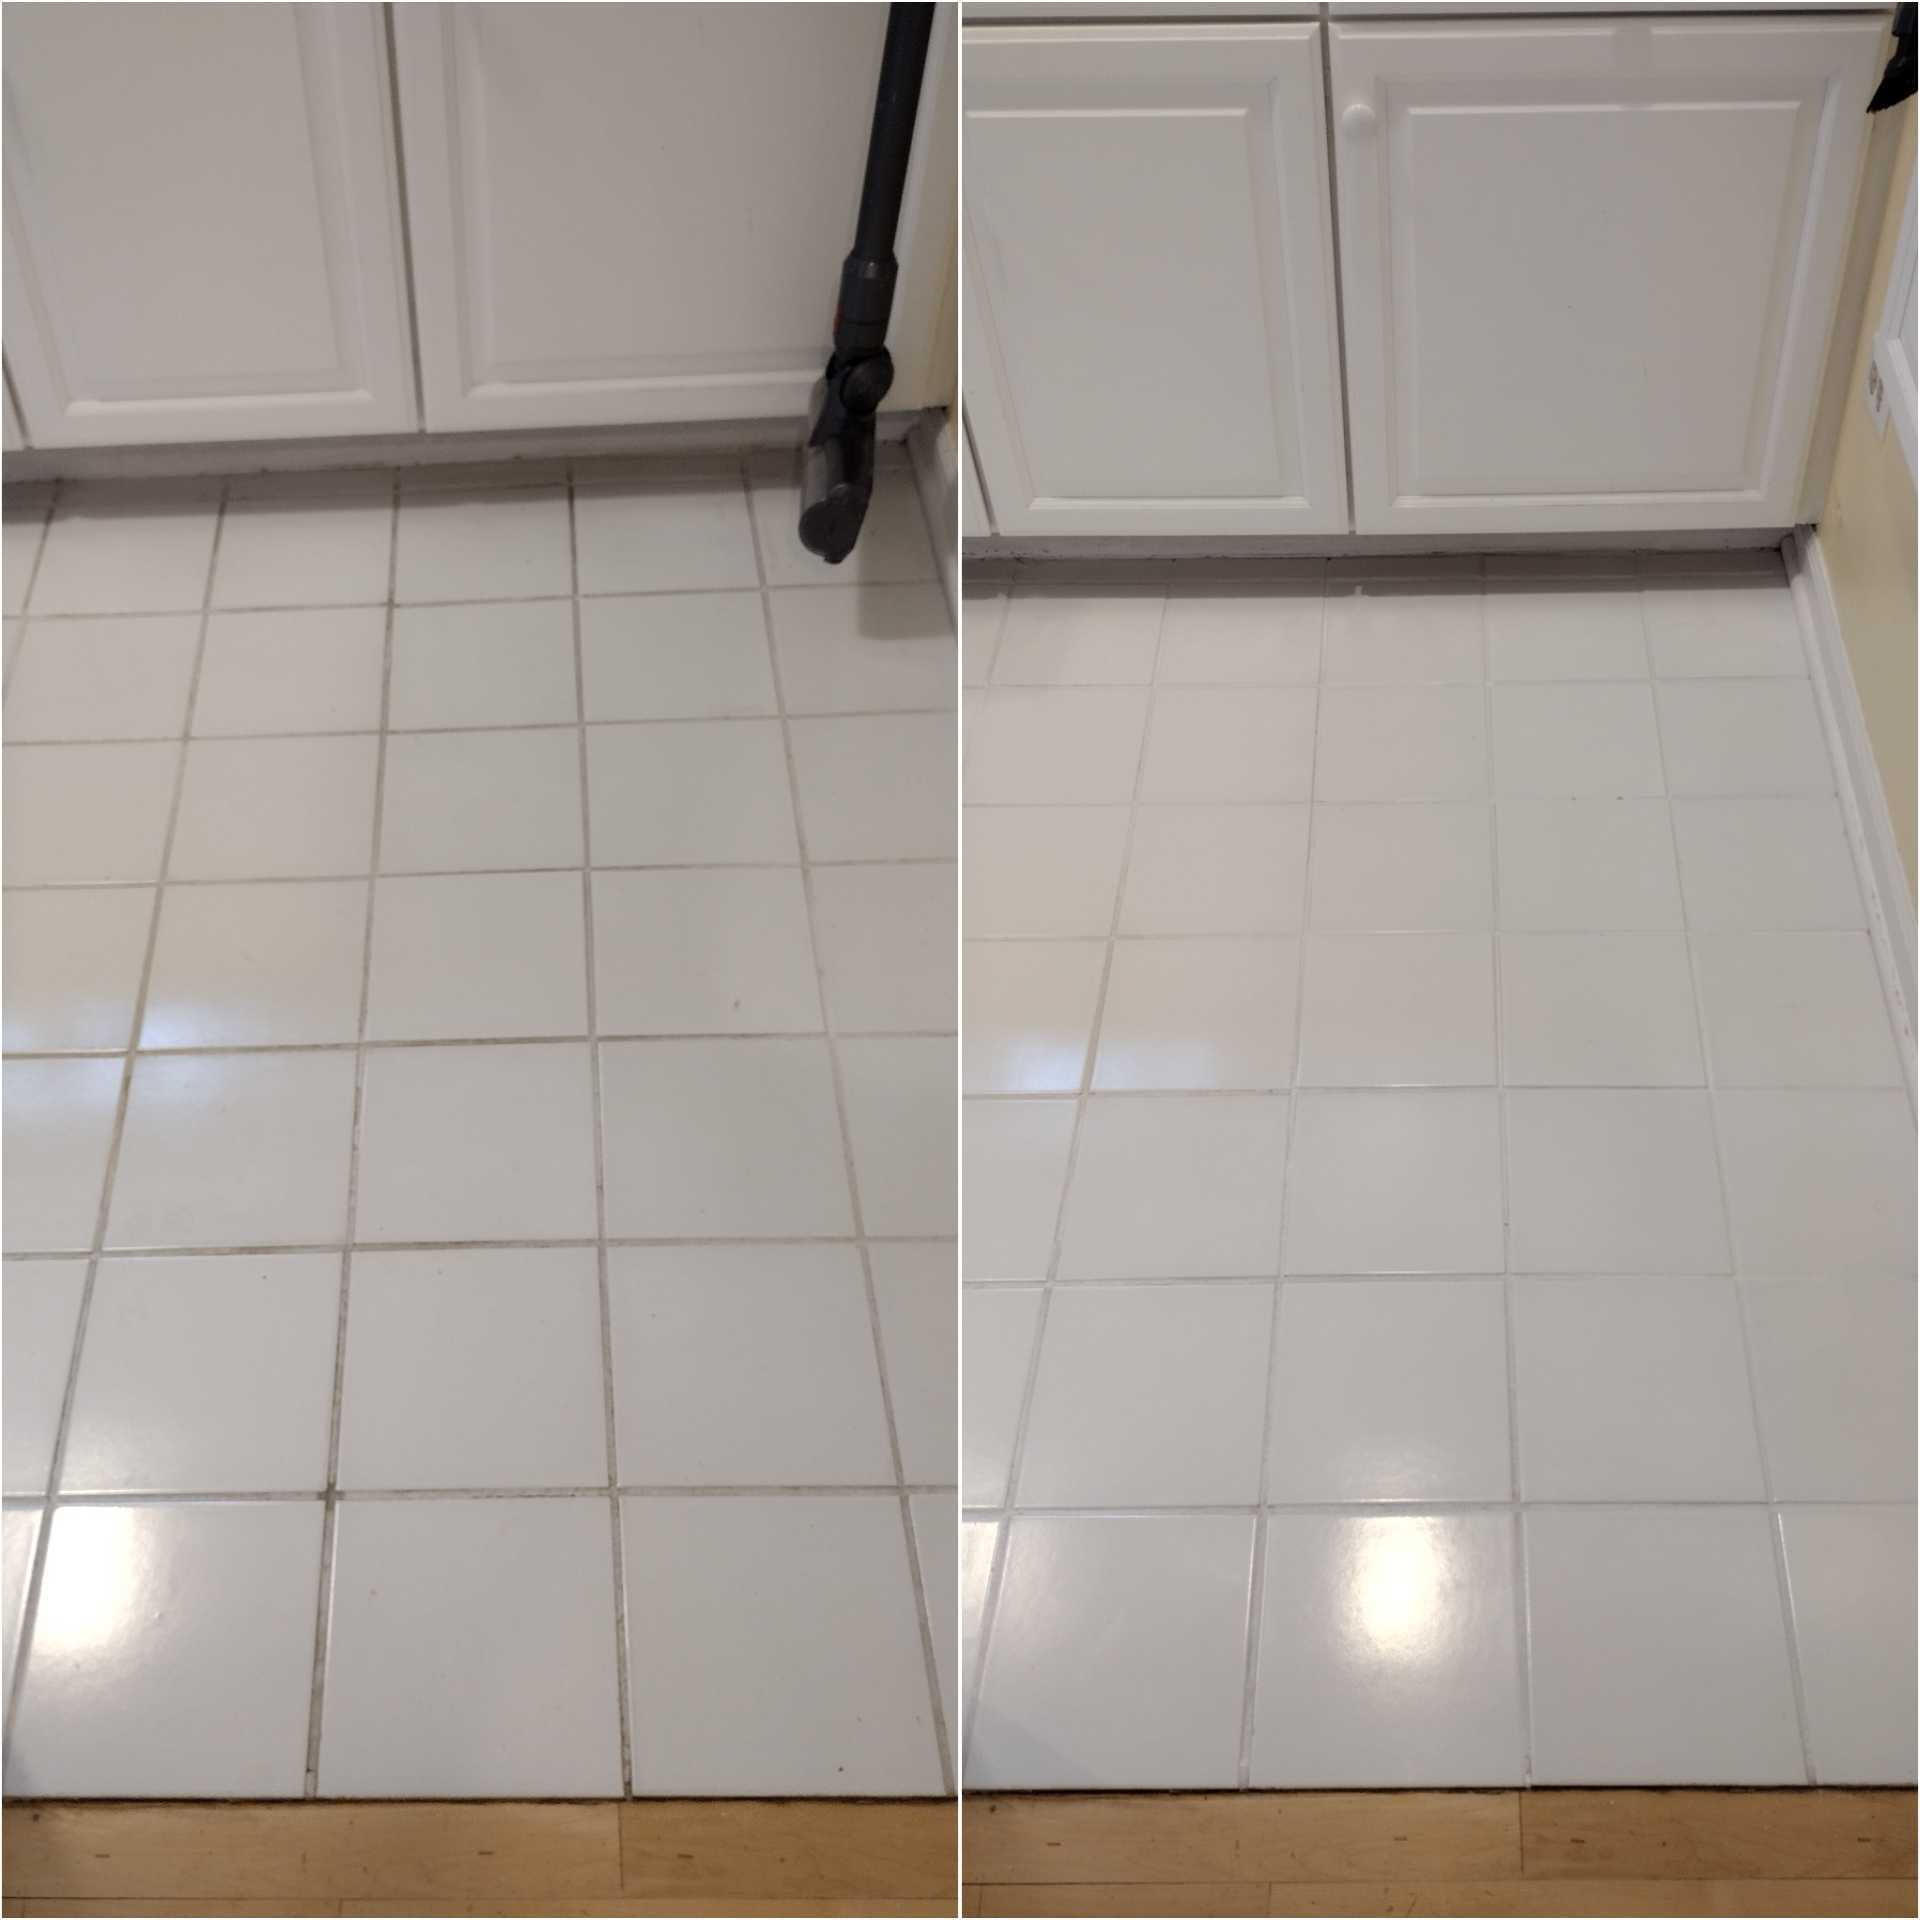 Cleaning Bathroom Tile